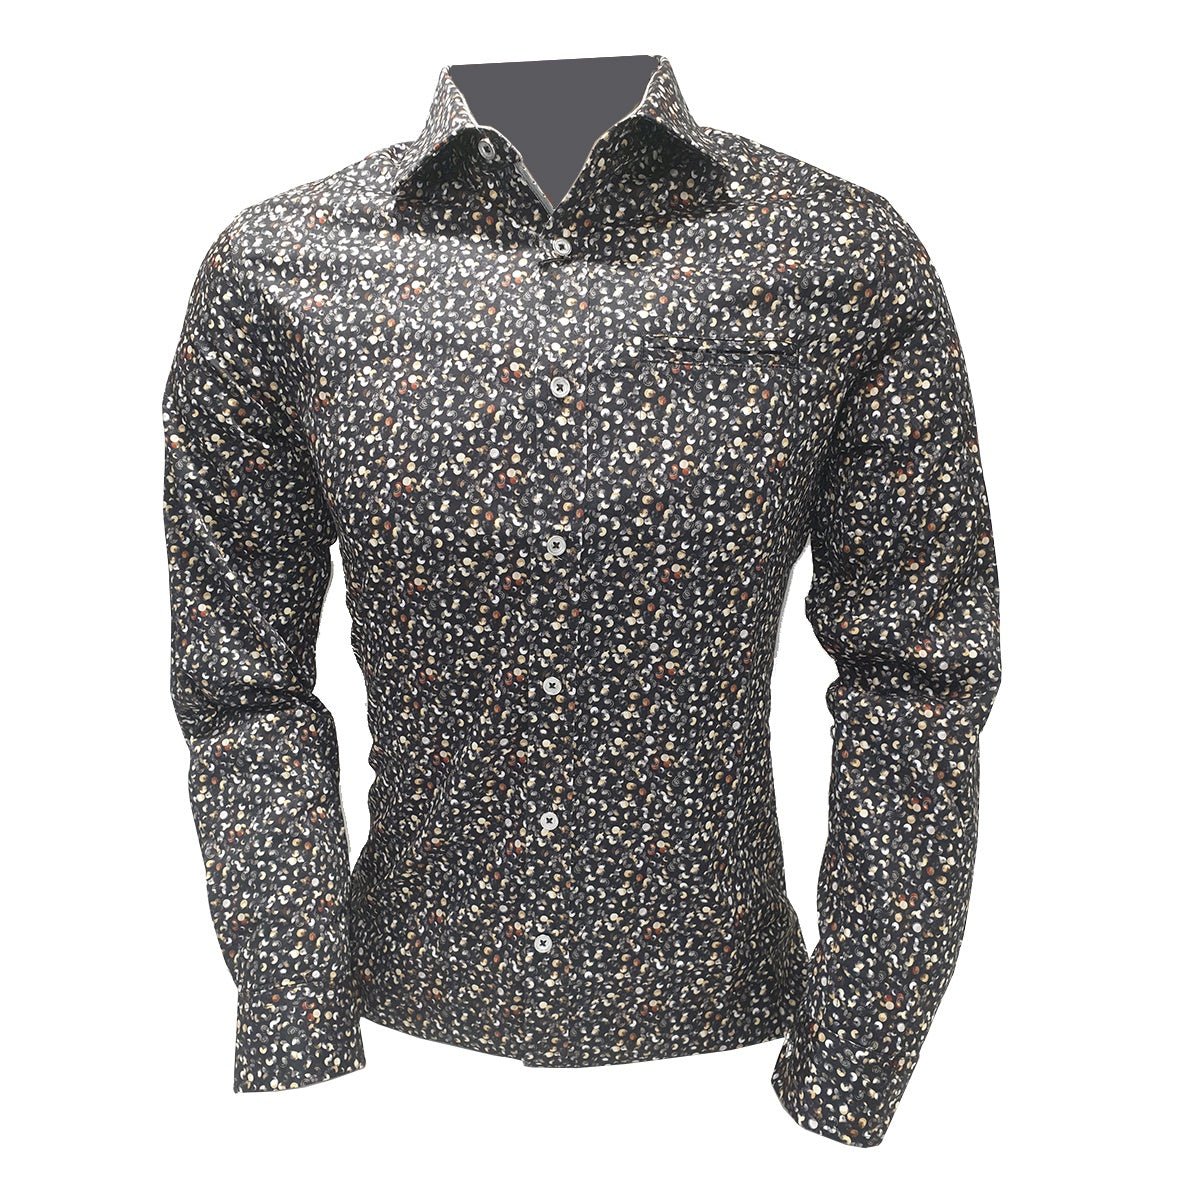 Astin Smith L680 Shirt - Thomson's Suits Ltd - Beige - S - 43869